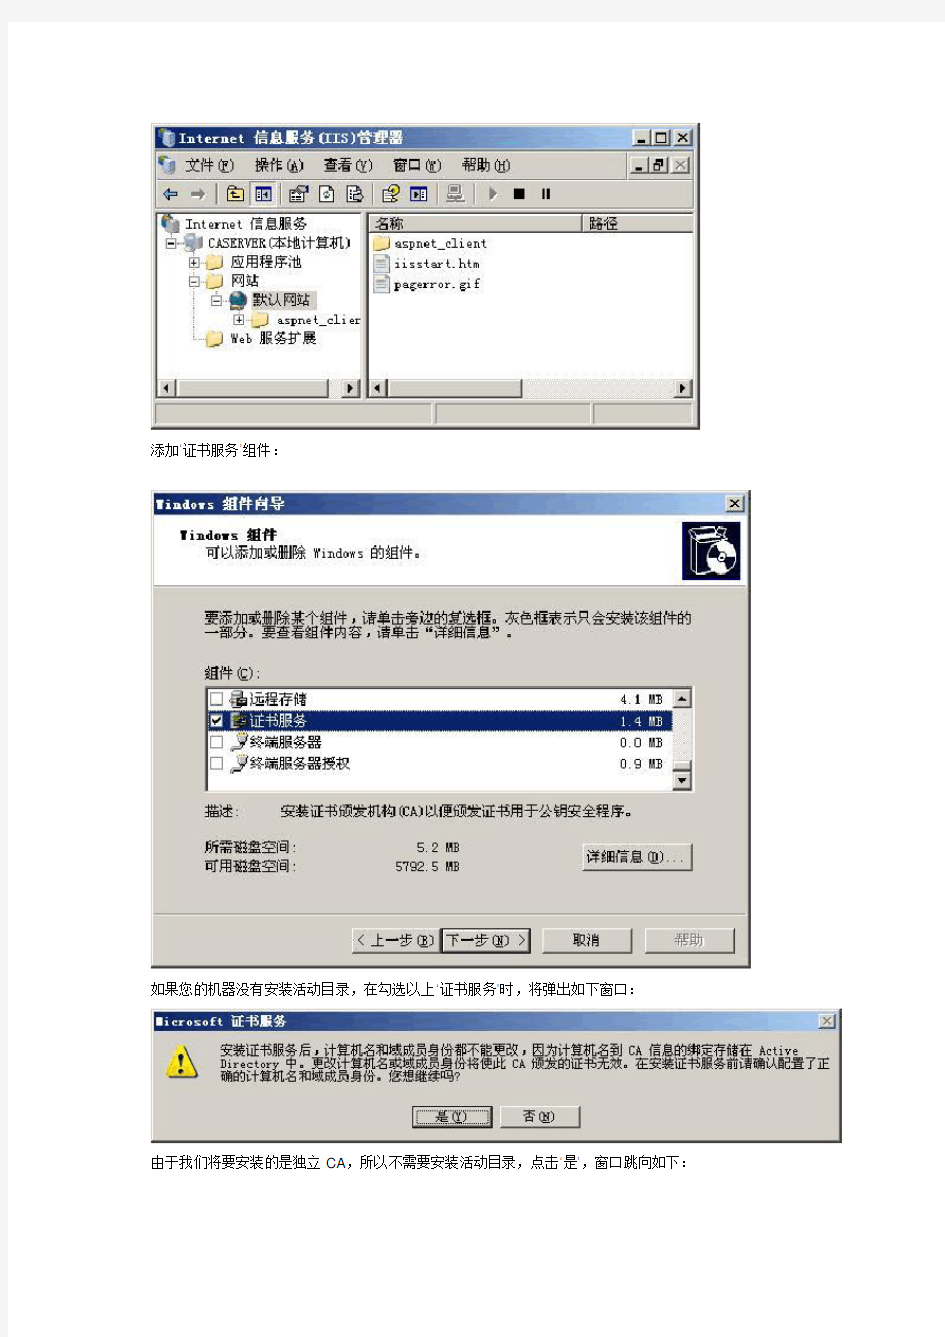 Windows 2003 CA 证书服务器配置